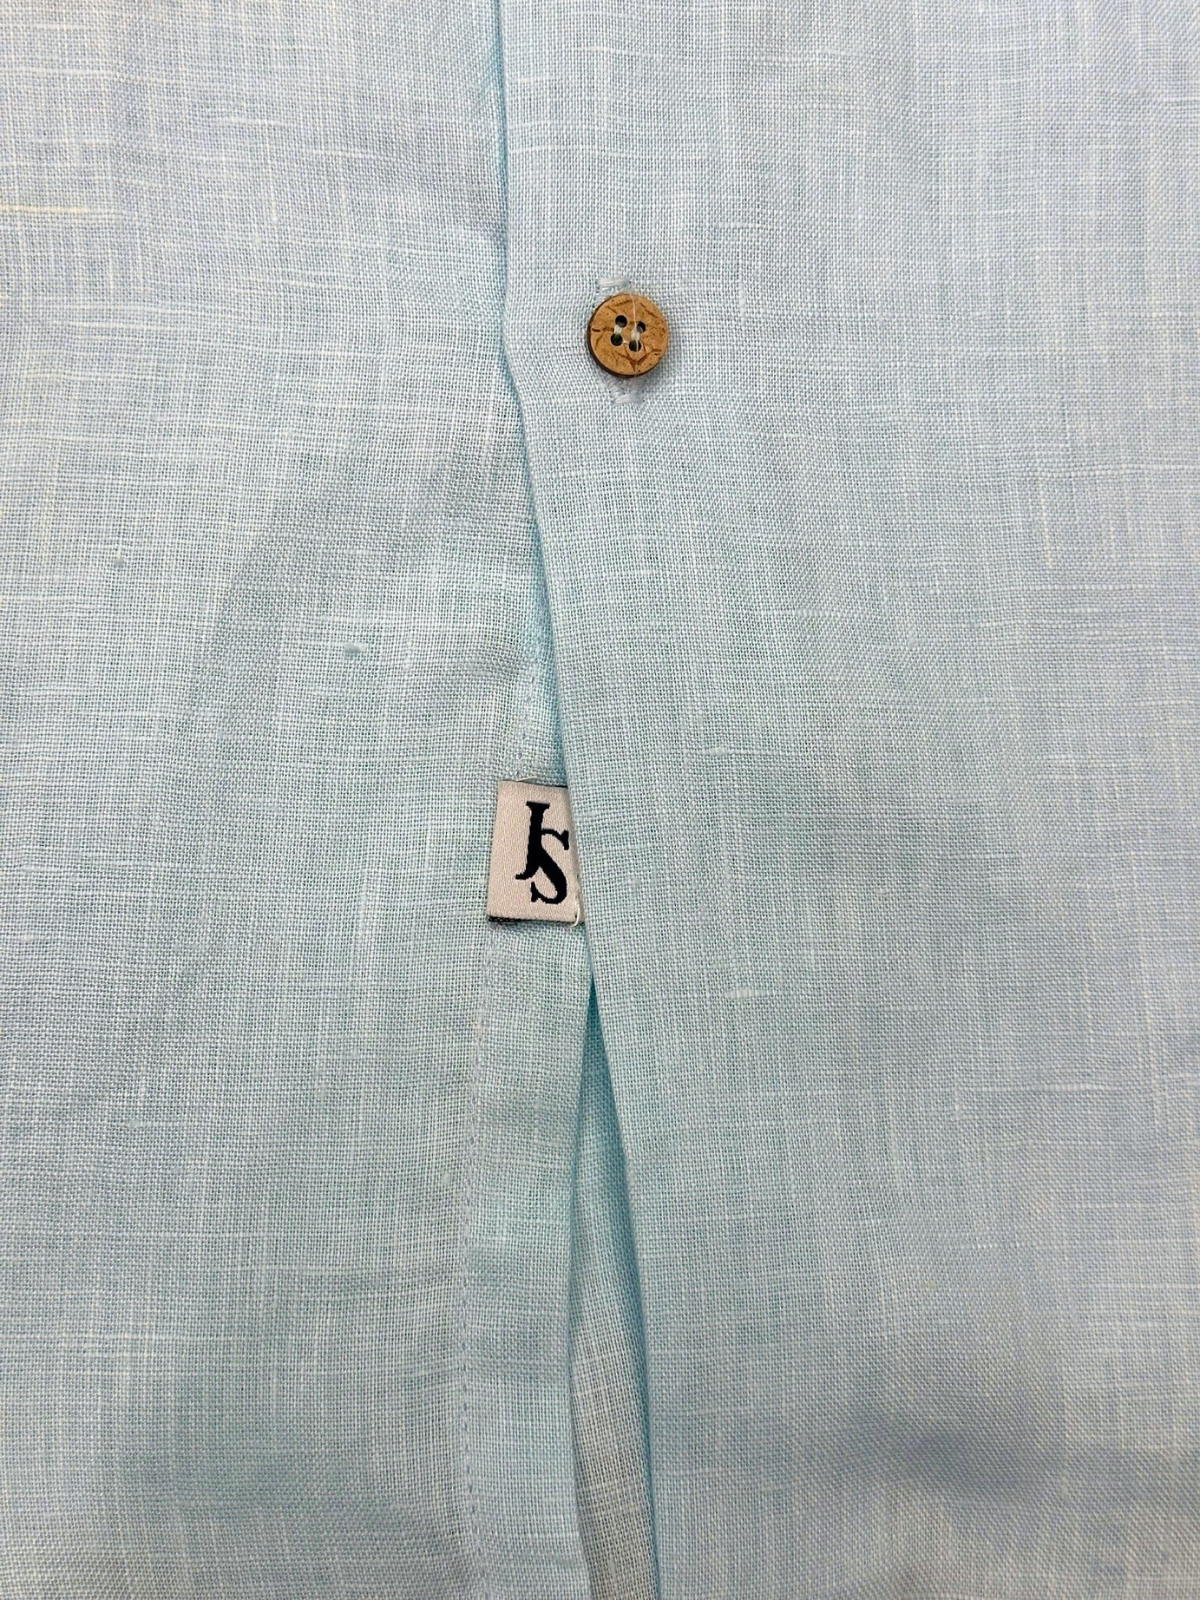 Byron Bay Whisper Linen L/S Shirt